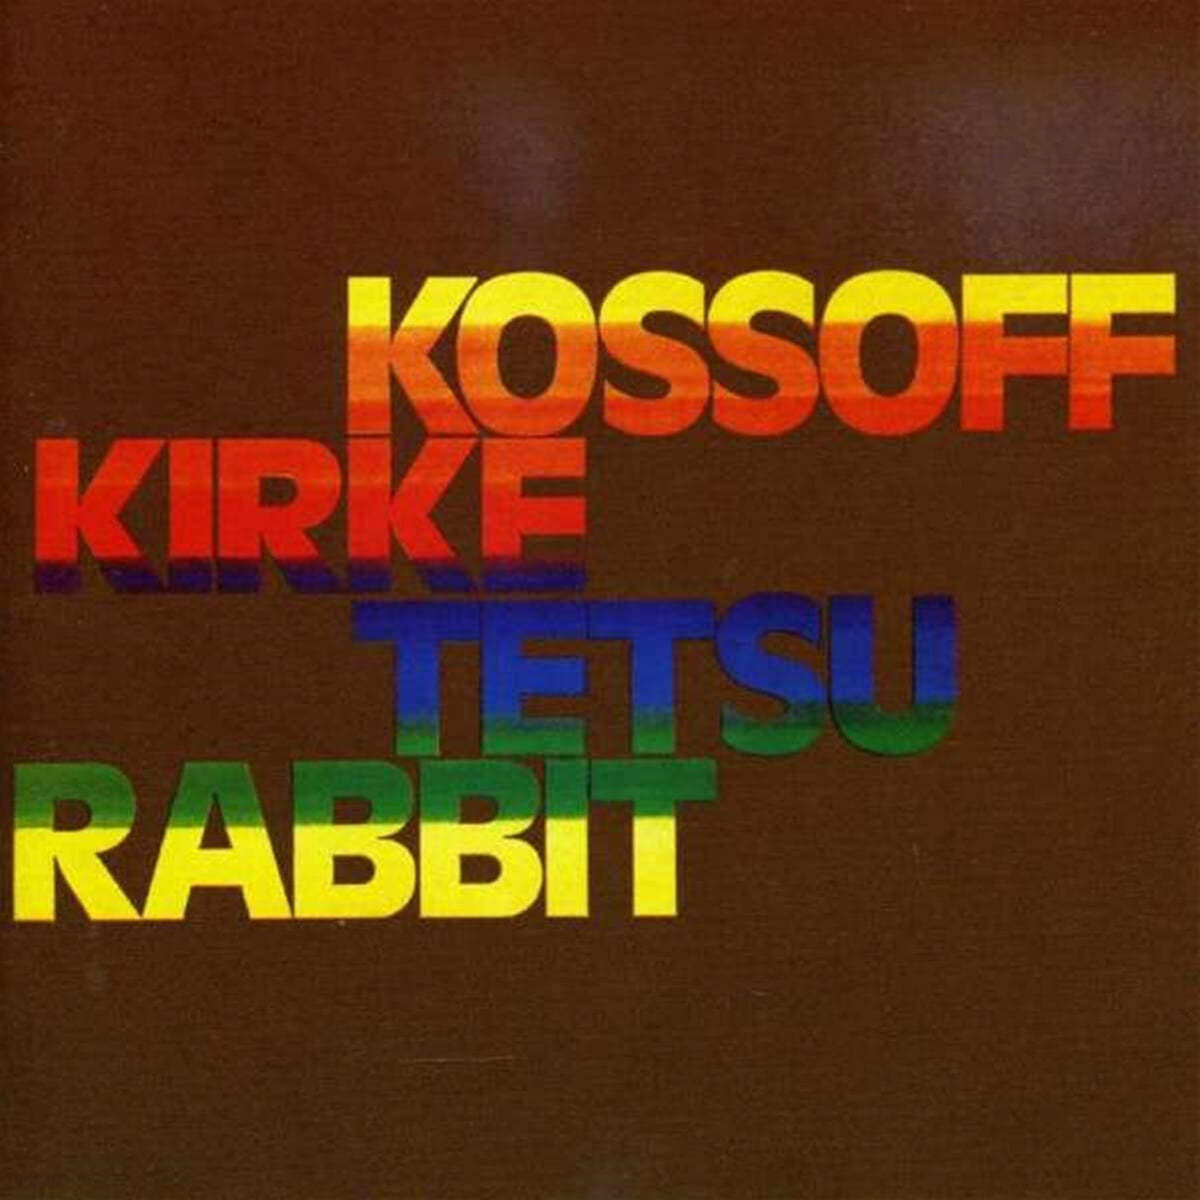 Kossoff Kirke Tetsu Rabbit (코소프 키르케 테수 래빗) - Kossoff Kirke Tetsu Rabbit 